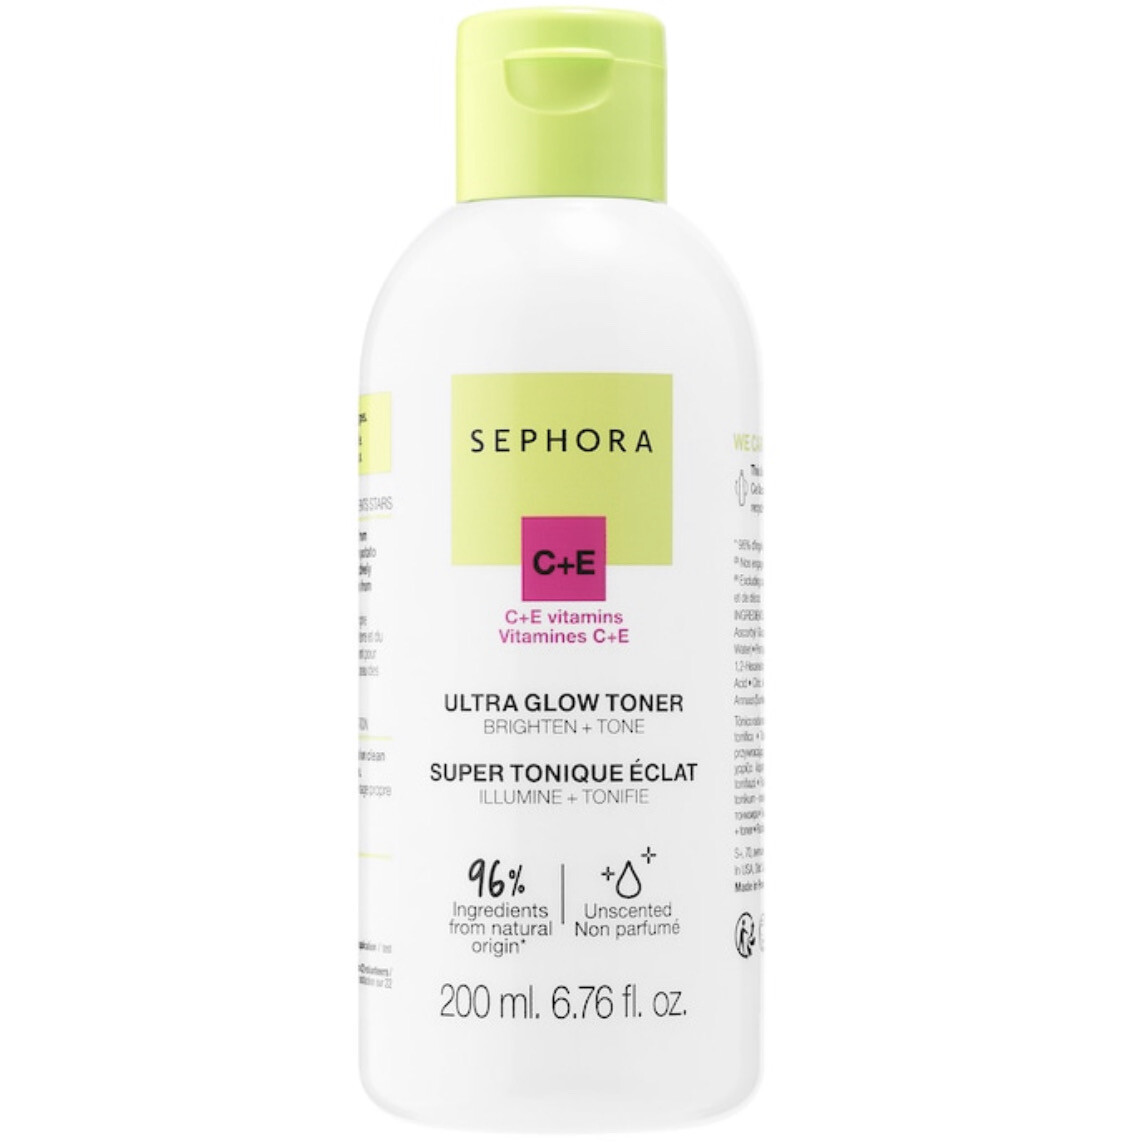 Sephora - Ultra Glow Toner with Vitamins C + E